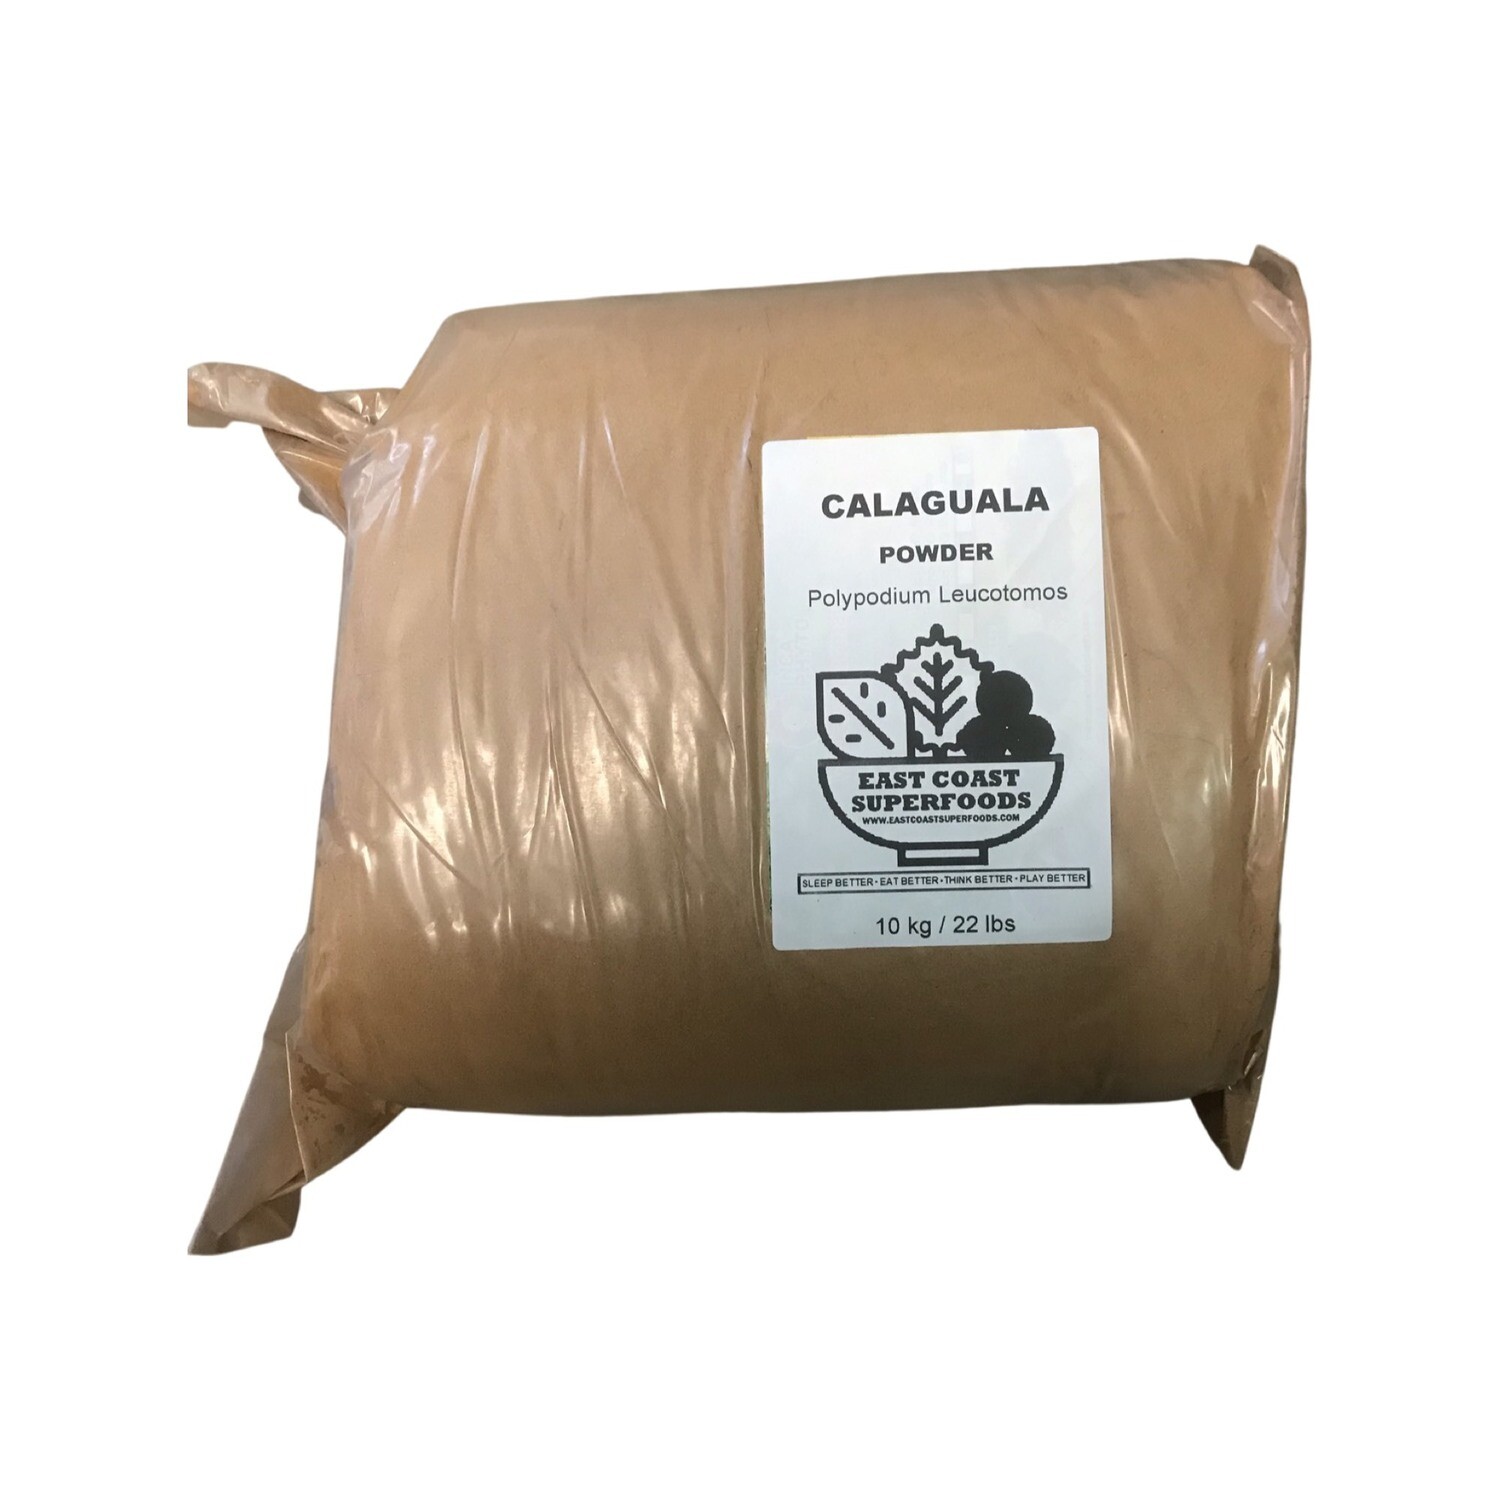 Calaguala Kalawalla Rhizome Powder Polypodium Leucotomos from East Coast Superfoods 10 kg / 22 lbs